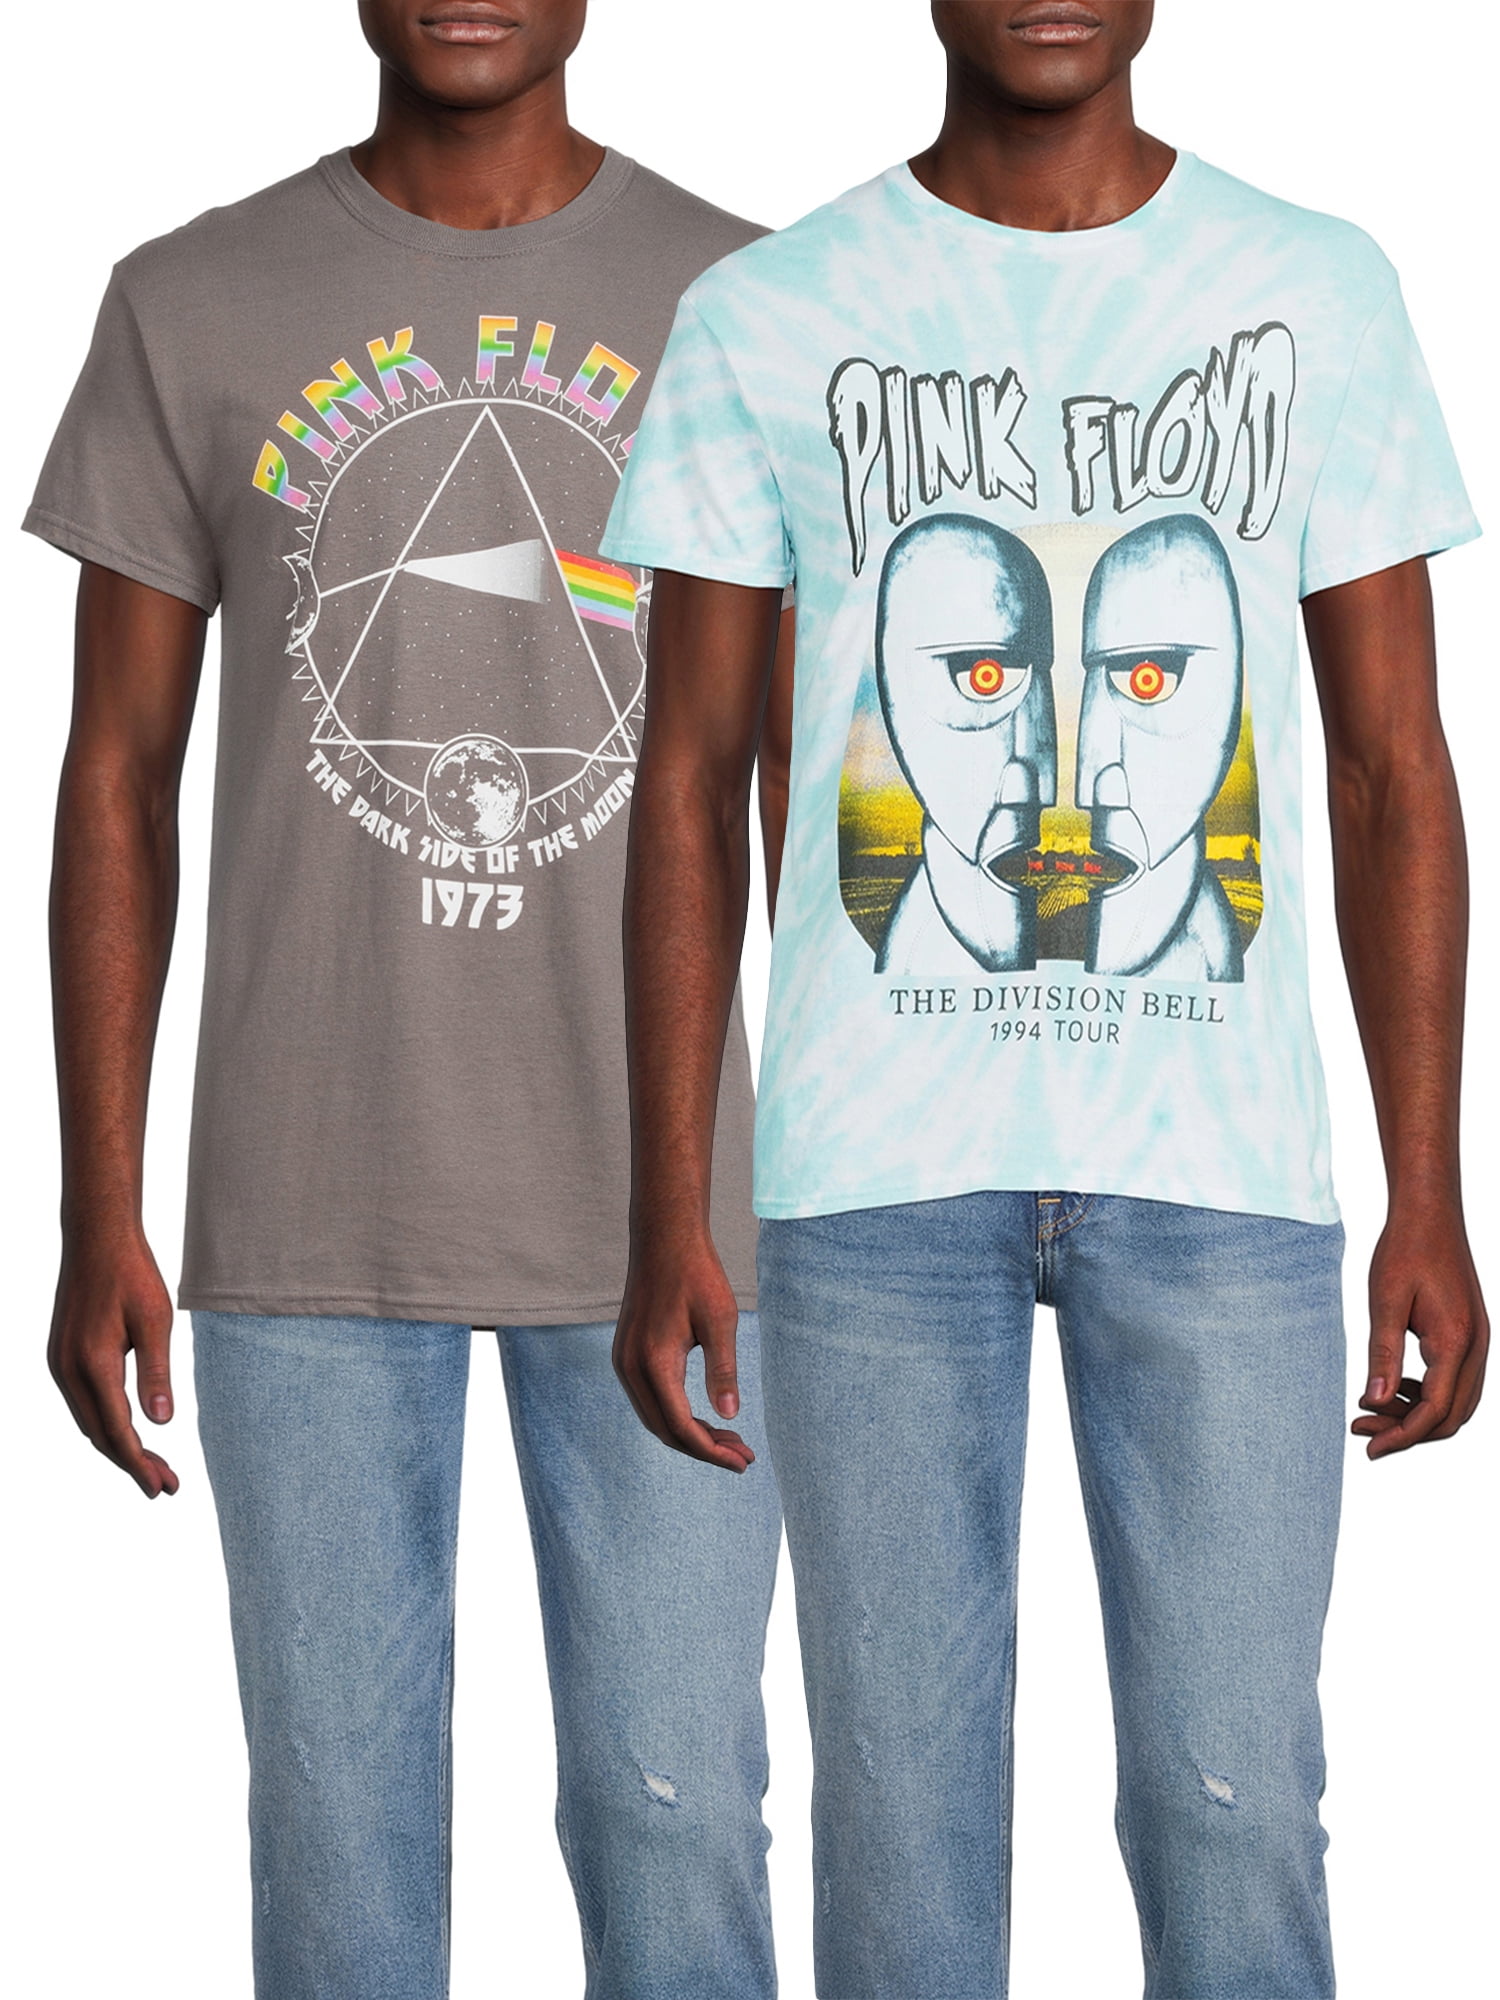 Kid/Children/Teenage Pink Floyd 1 Progressive Rock Black T-Shirt Long/Short Sleeve